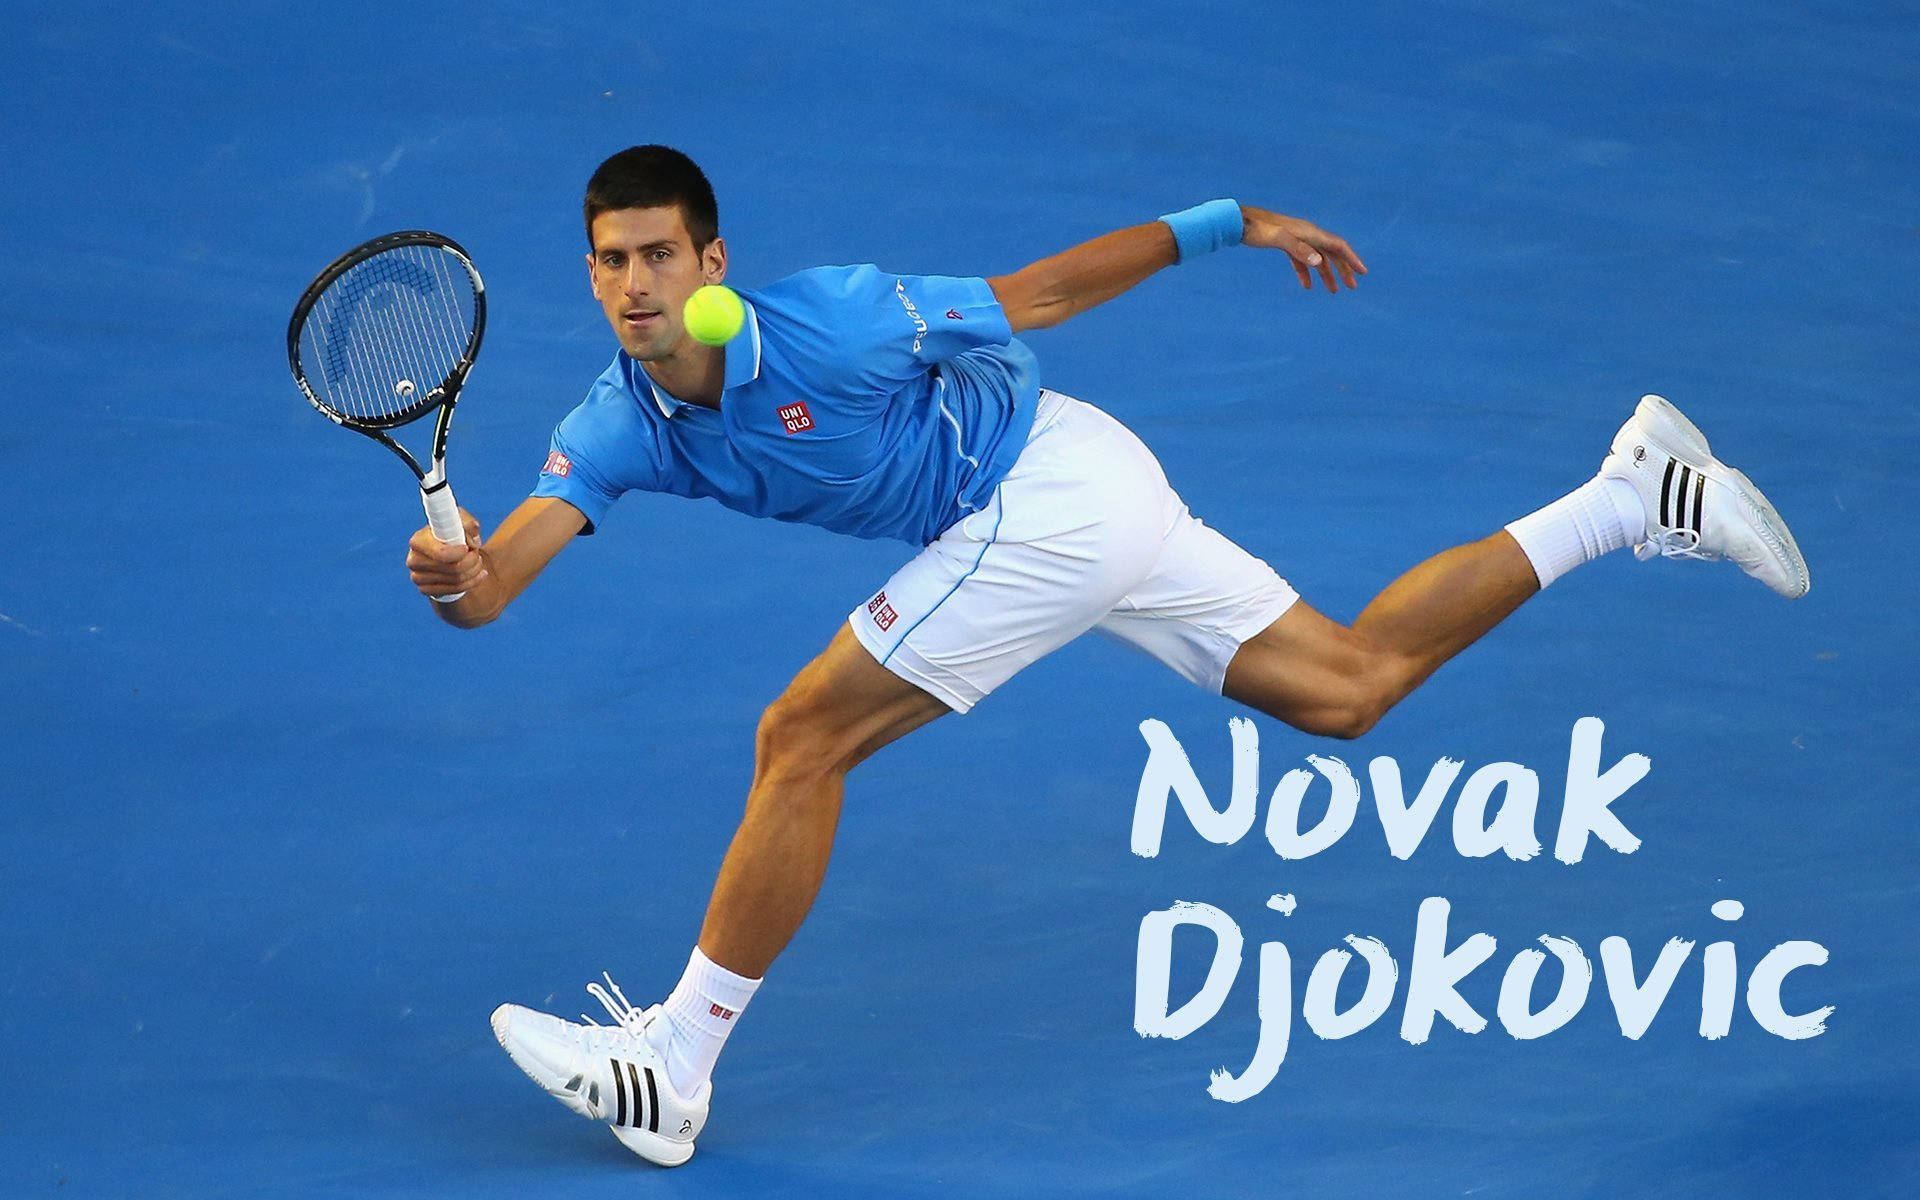 Novak Djokovic Tennis Poster Background